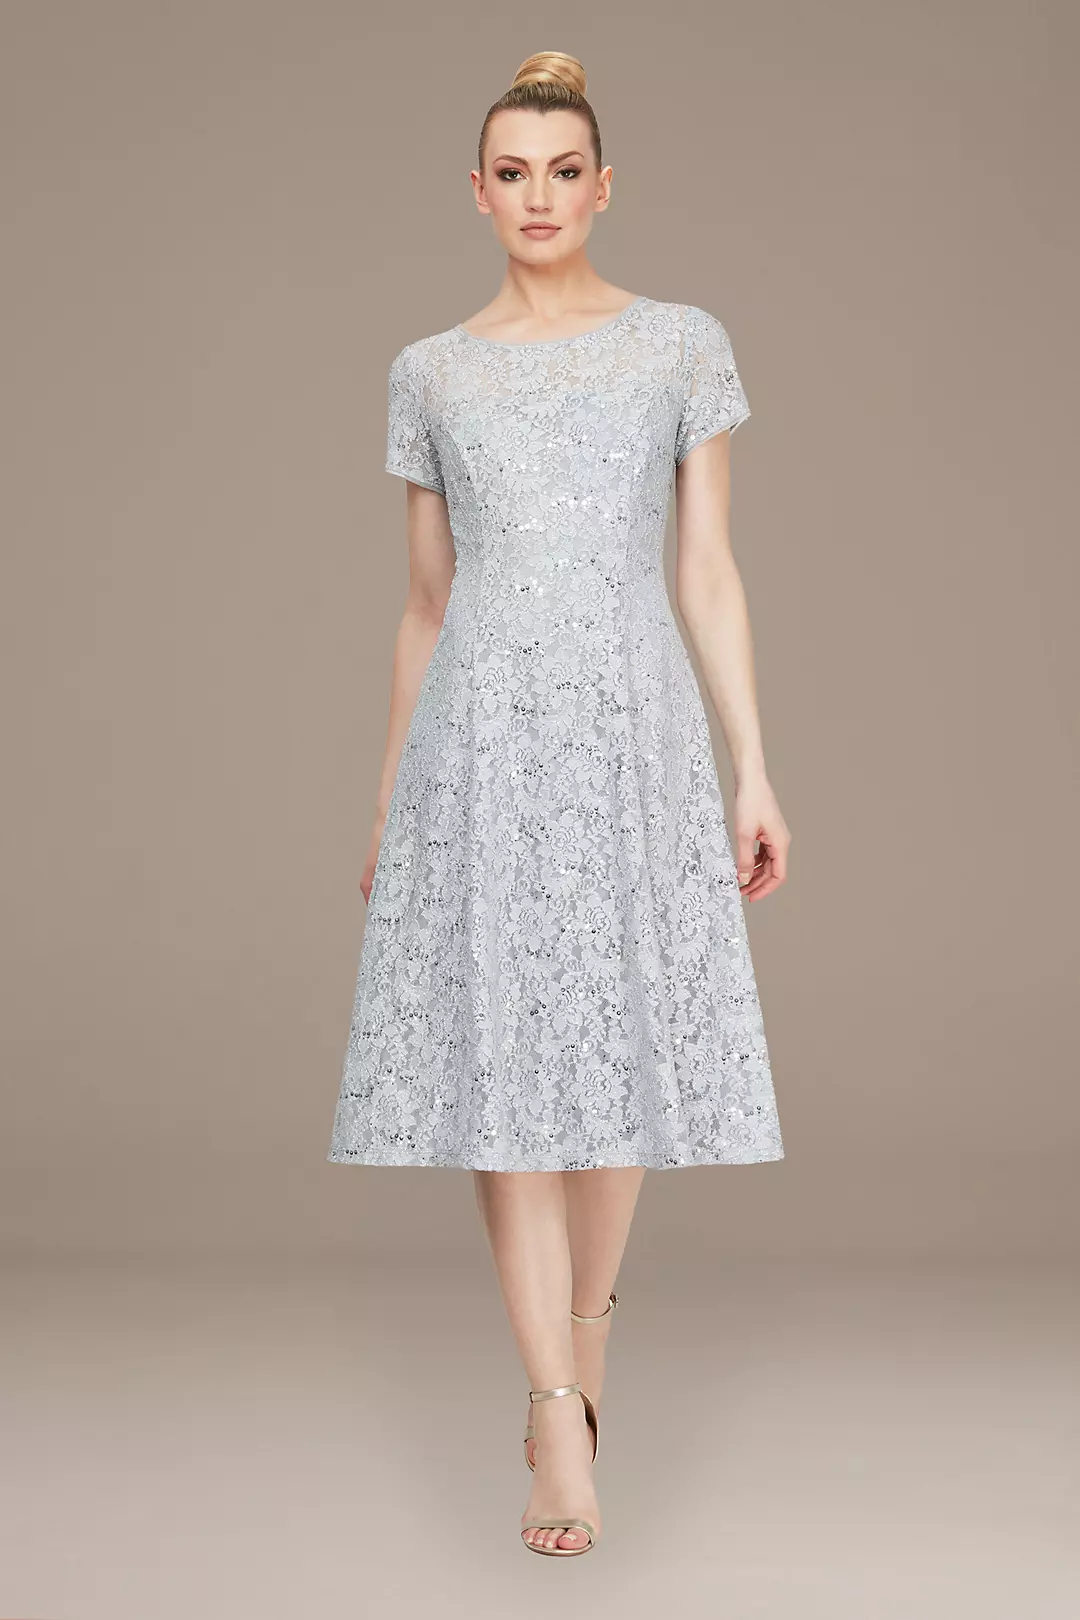 Sequin Lace Cap Sleeve Tea-Length Dress Image